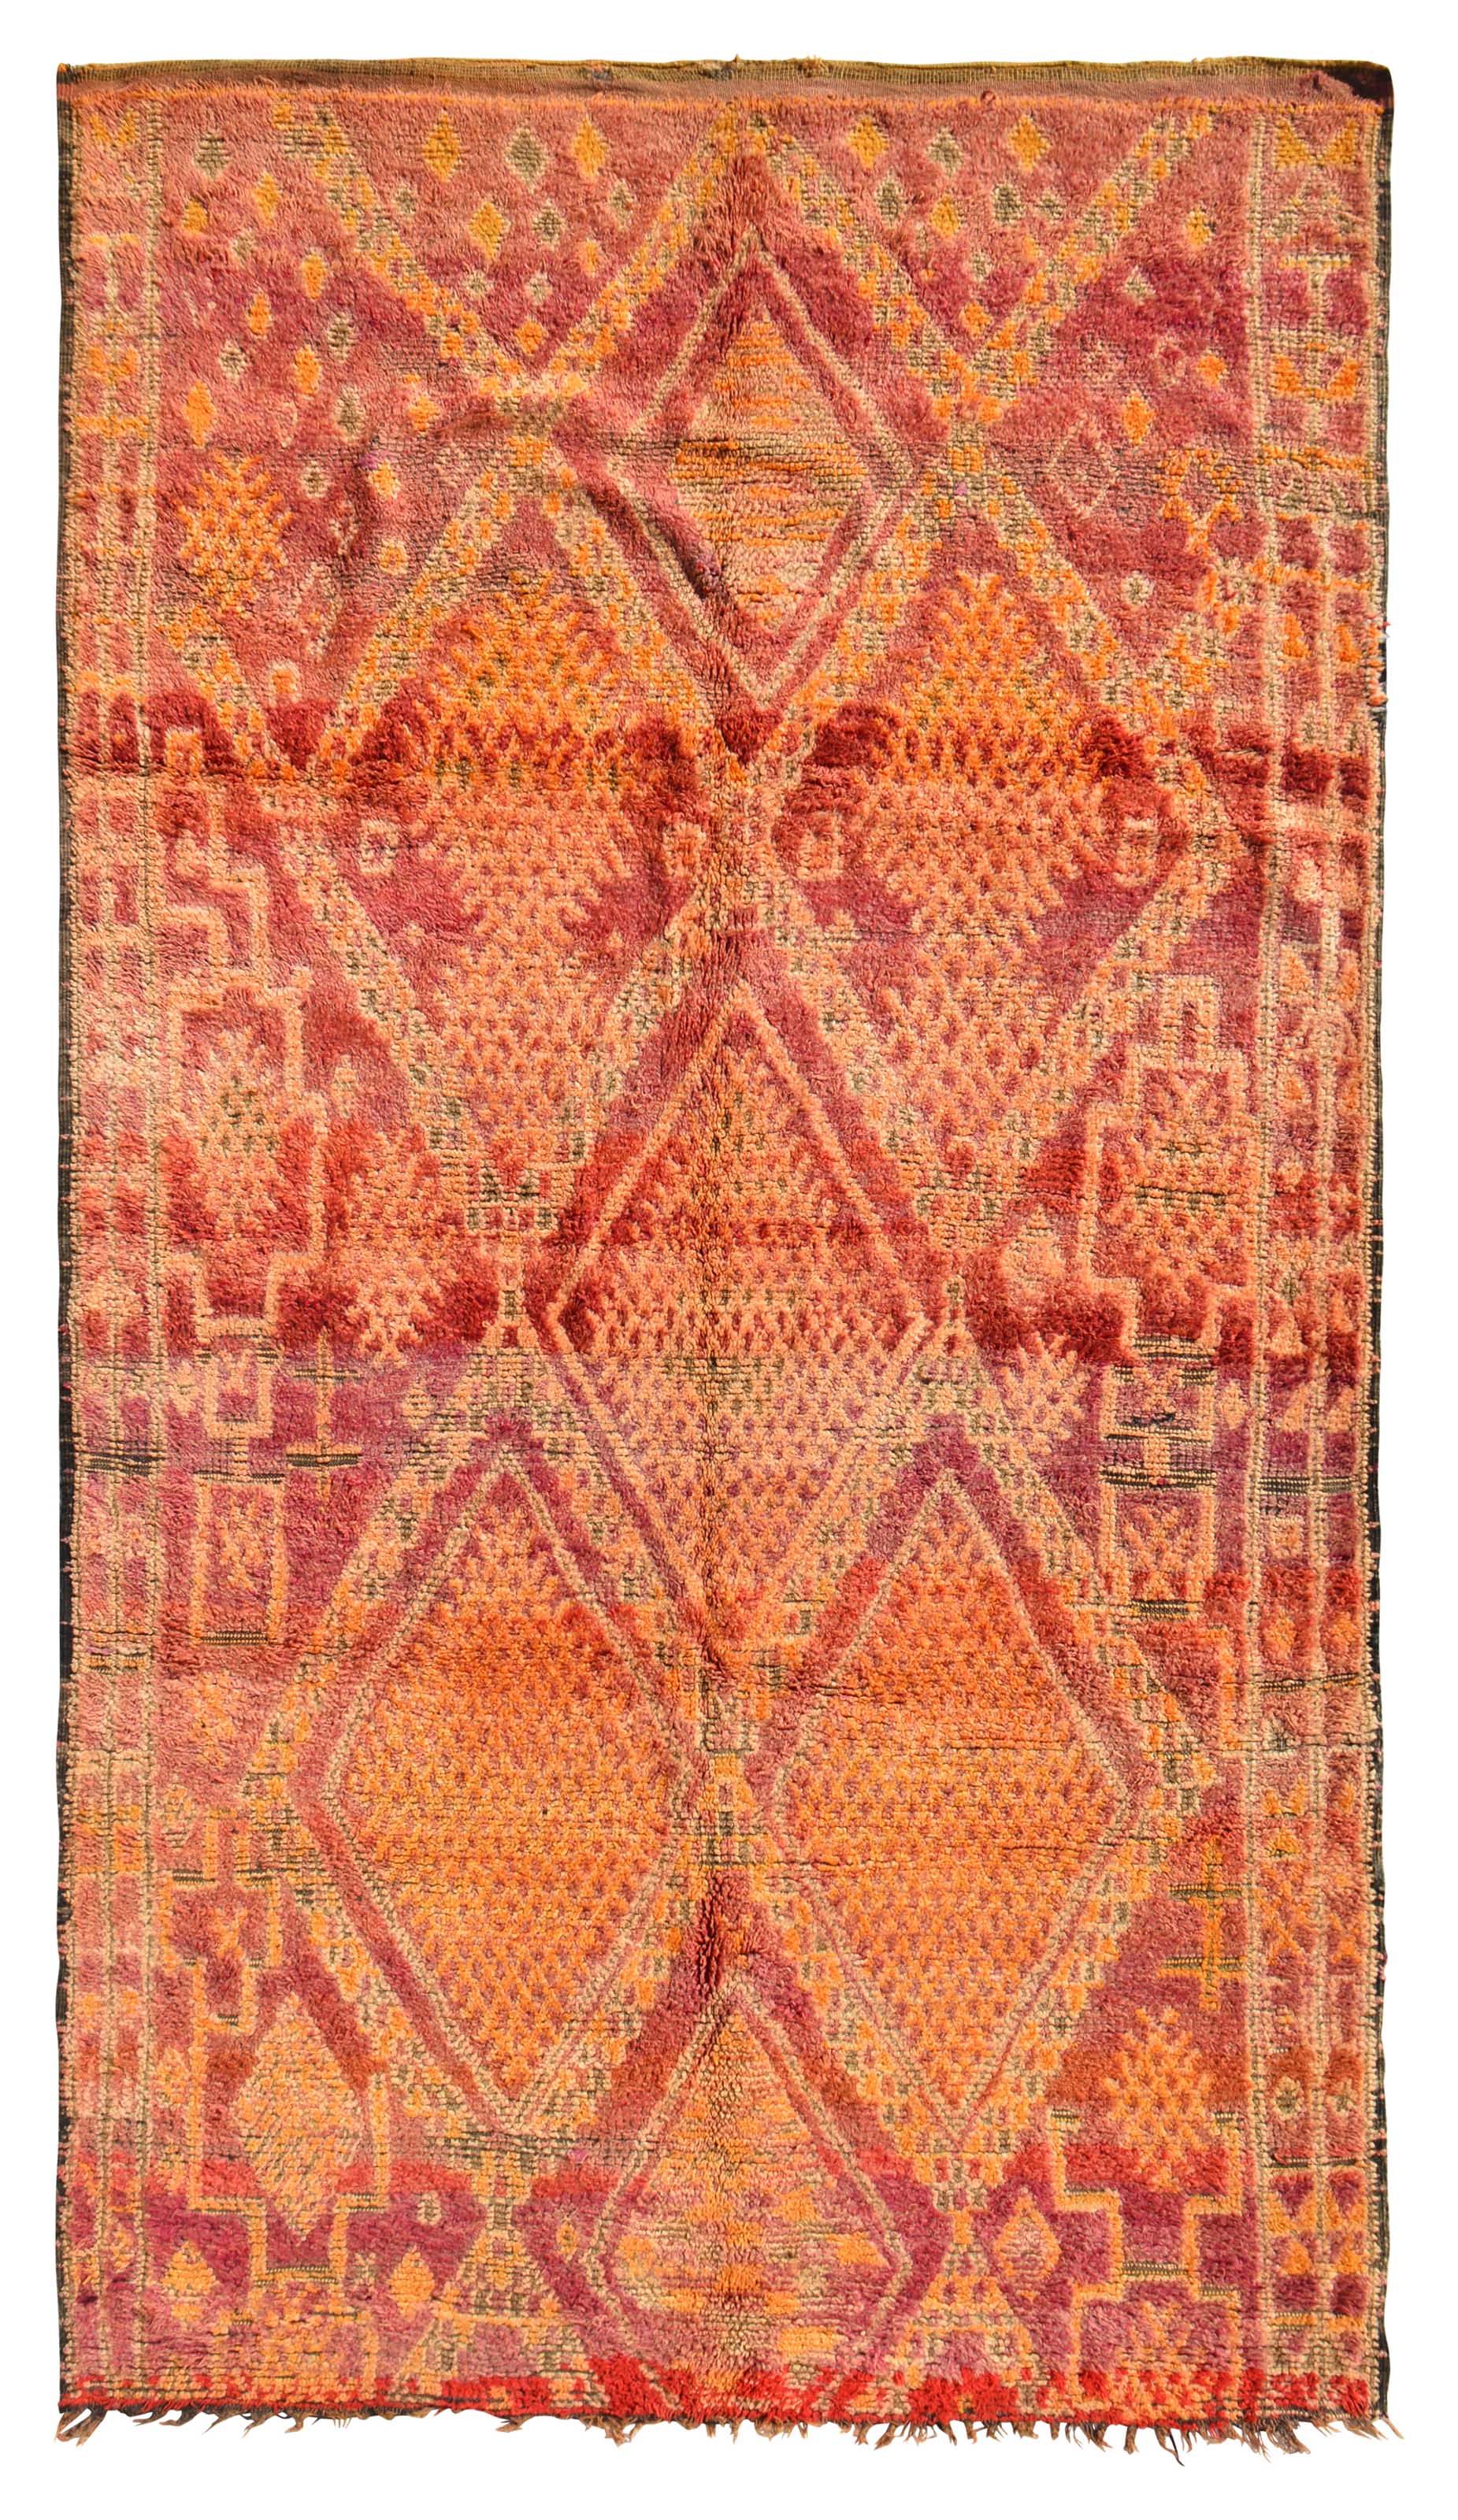 Vintage Moroccan Rug Vintage Distressed Rugs | Vintage Moroccan Rug Large Size | Illuminate Collective illuminate collective 